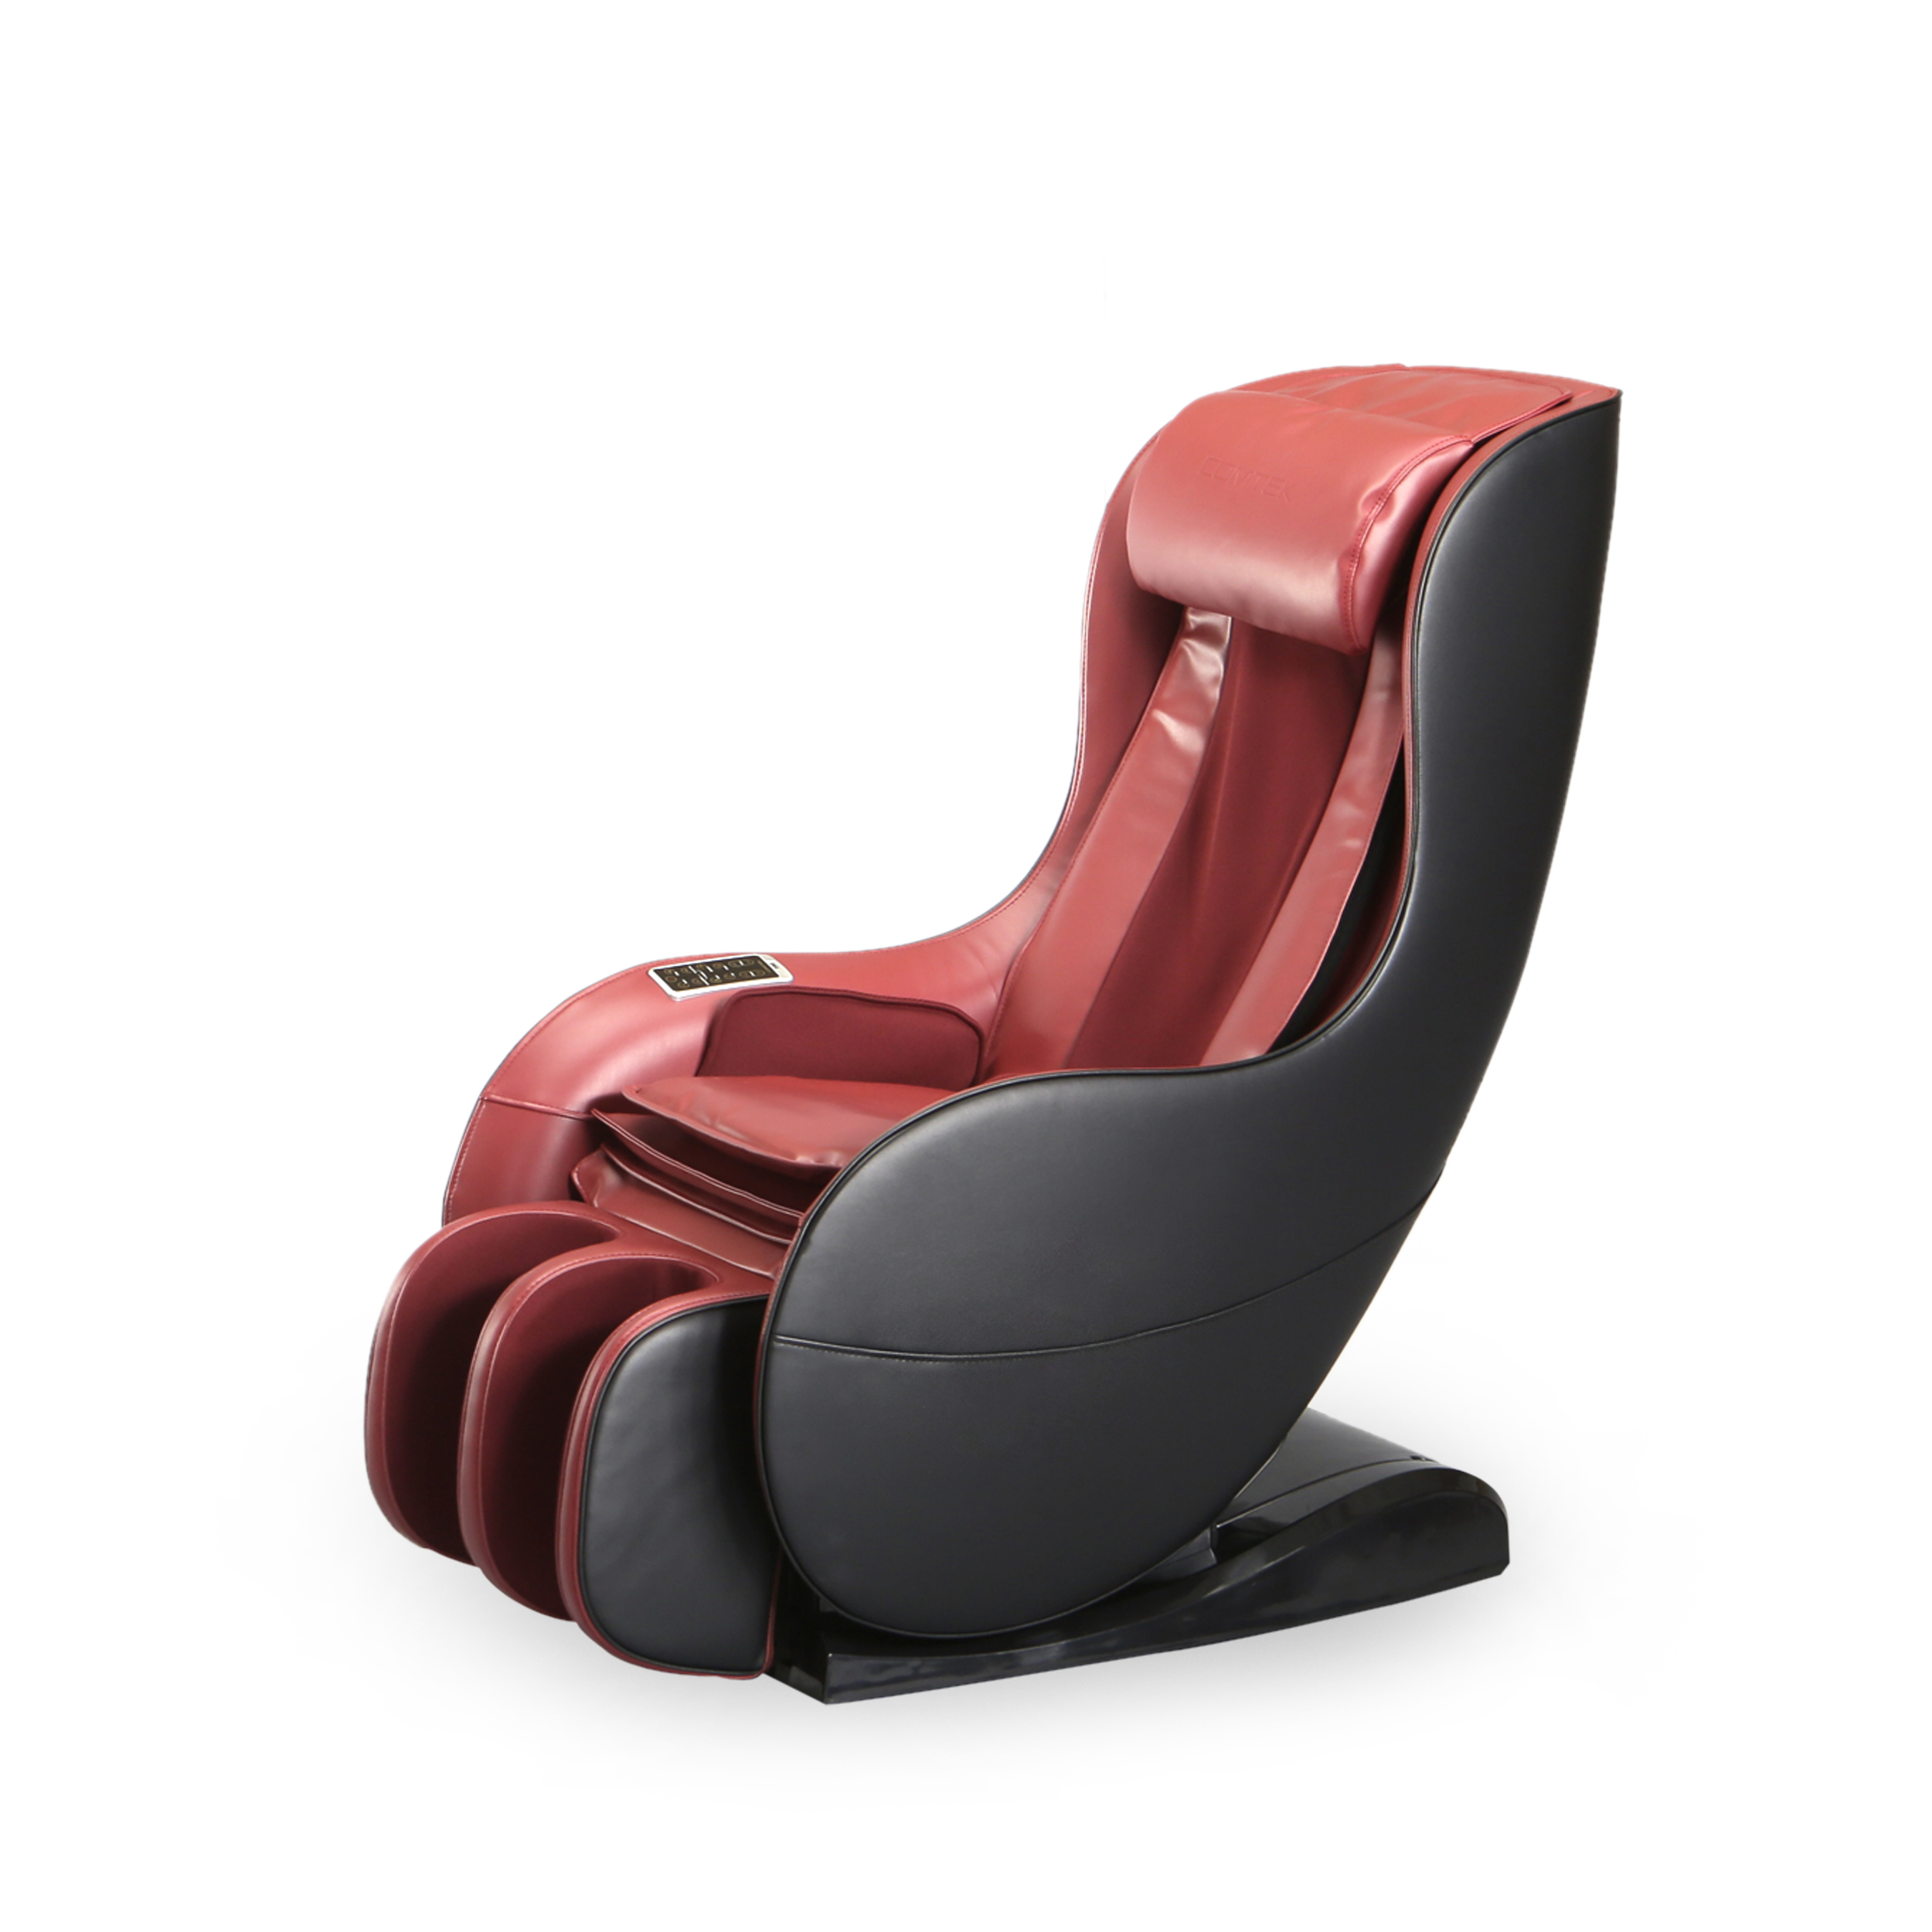 Executive Massage Chair – Standard Sports